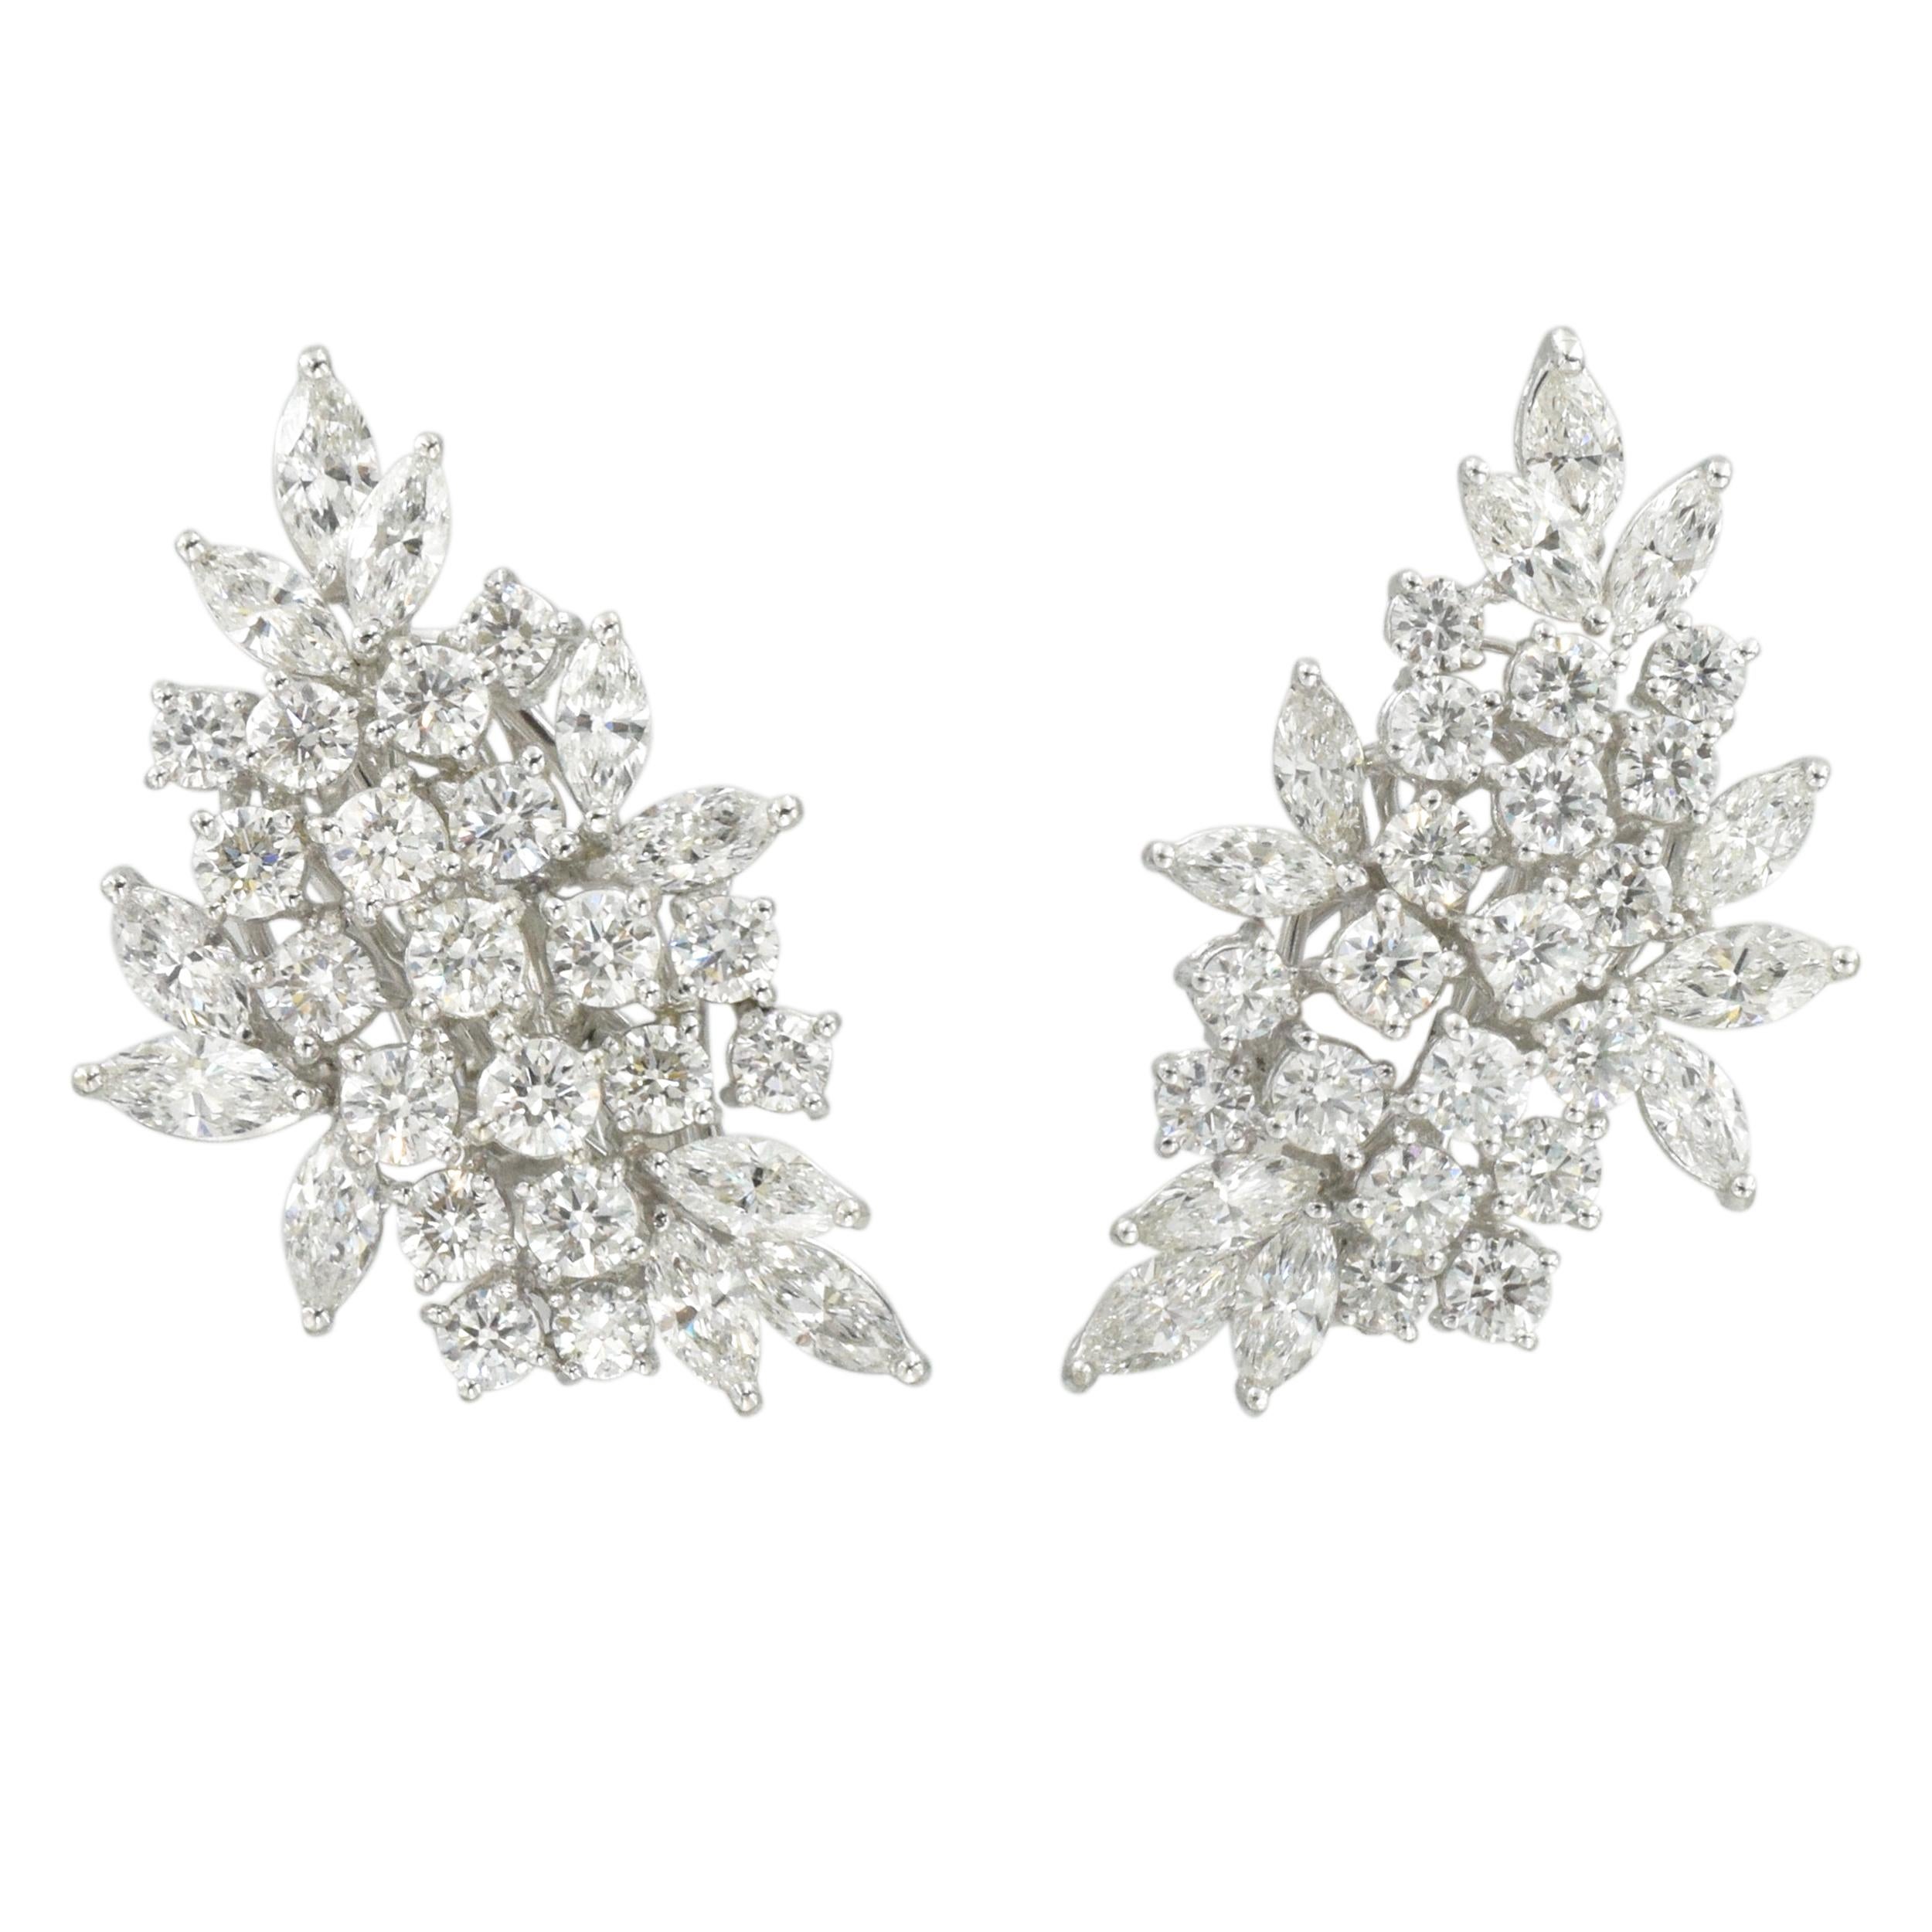 Marquise Cut Diamond Earrings